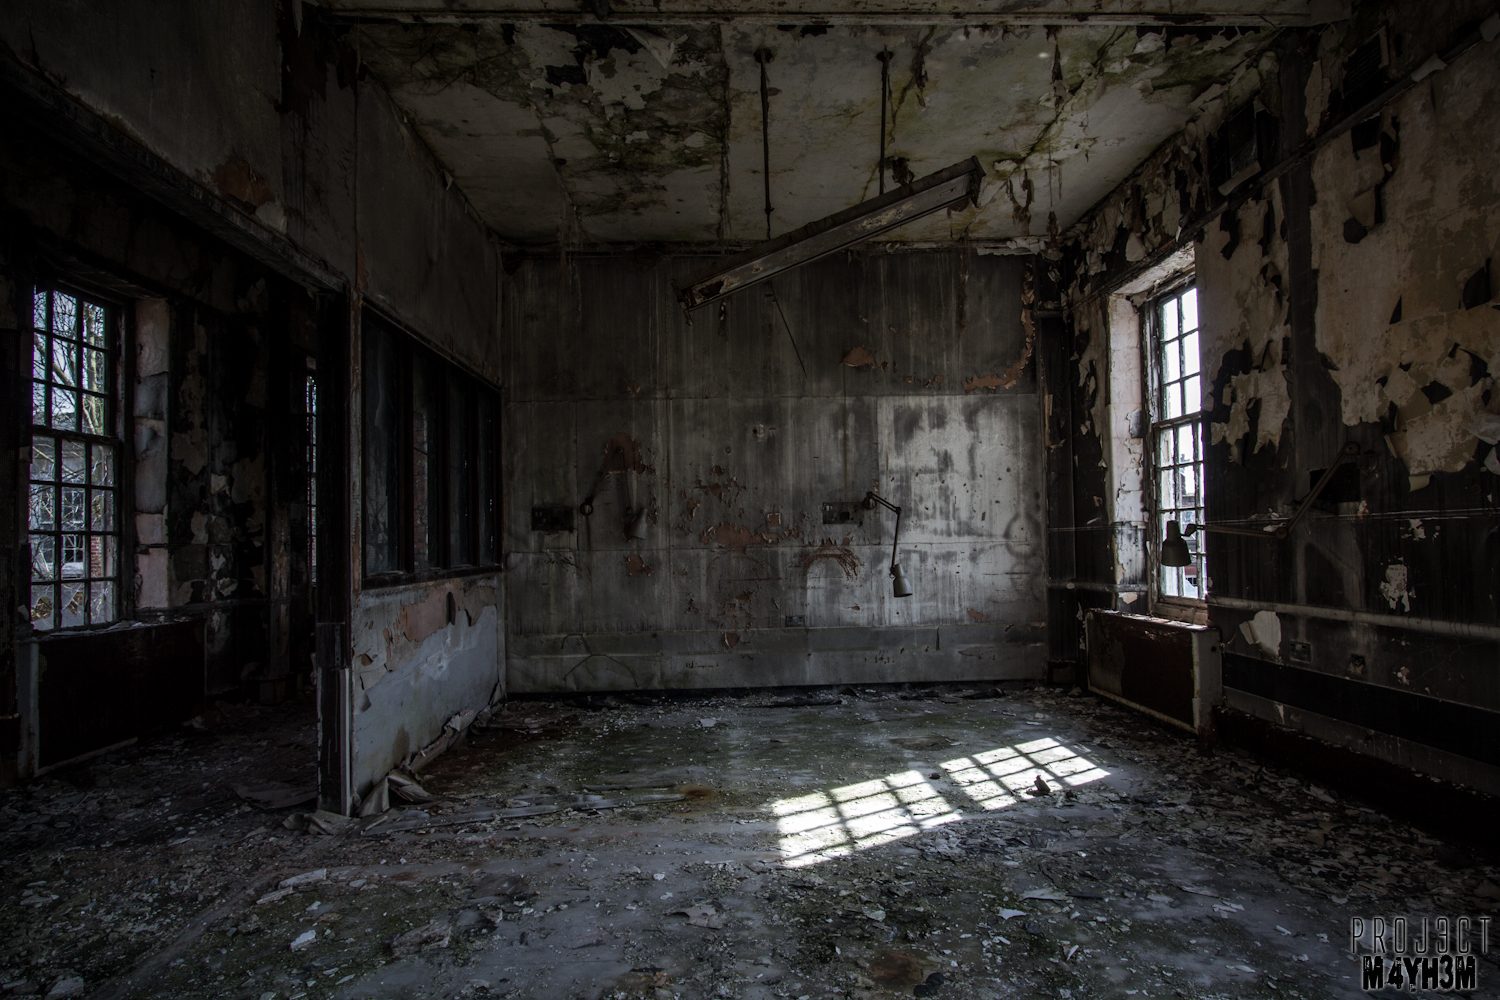 Urbex: Severalls Lunatic Asylum, Colchester - April 2013 (revisit) Part 2